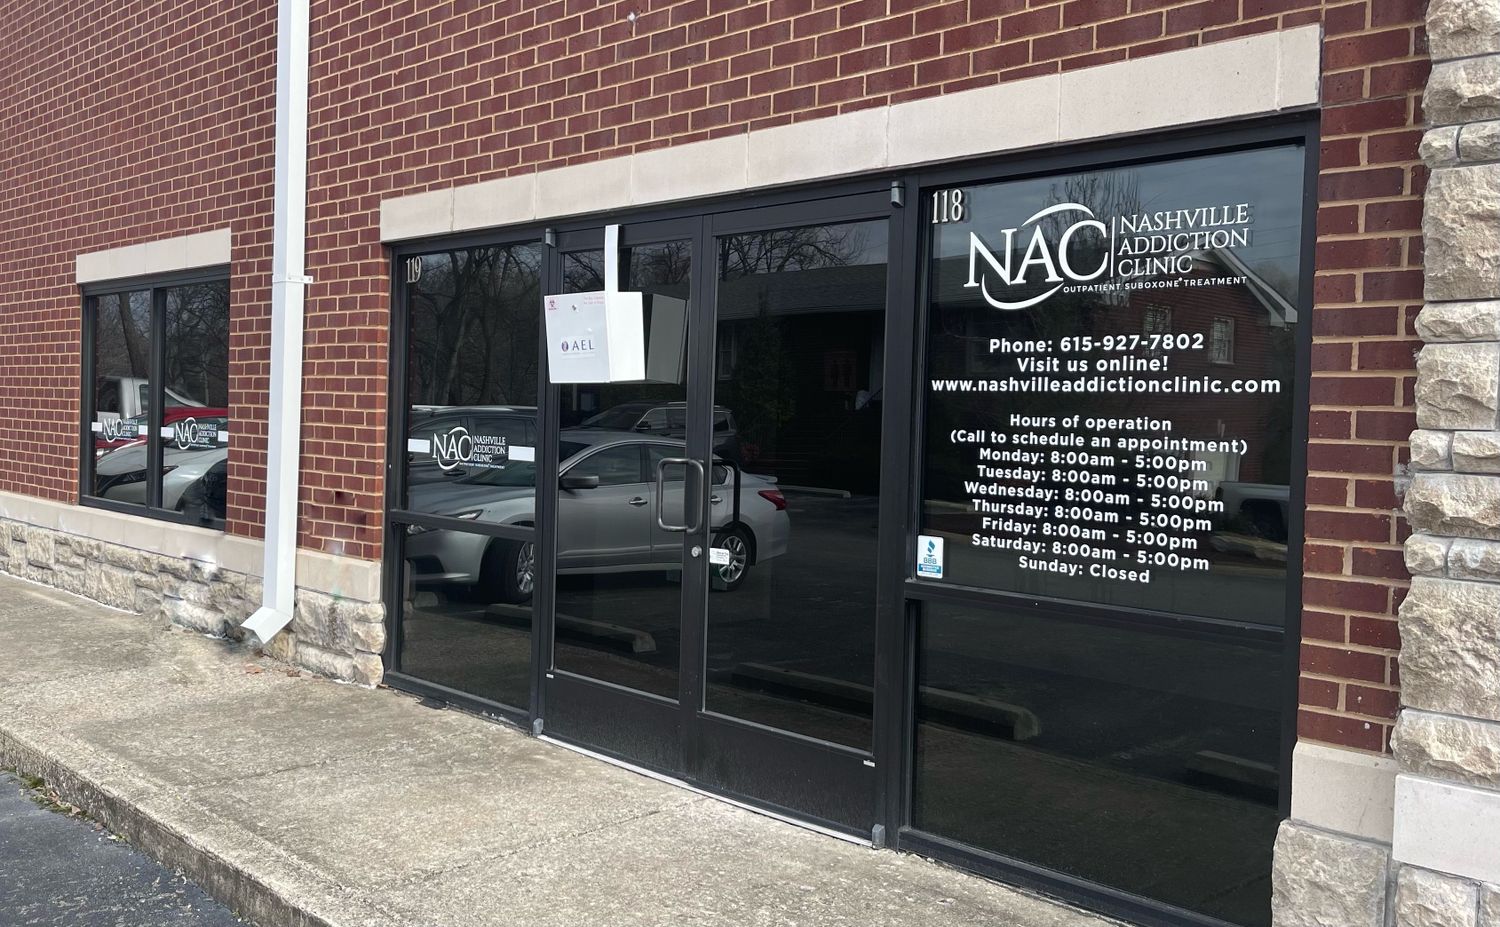 Gallery Photo of Nashville Addiction Clinic entrance 